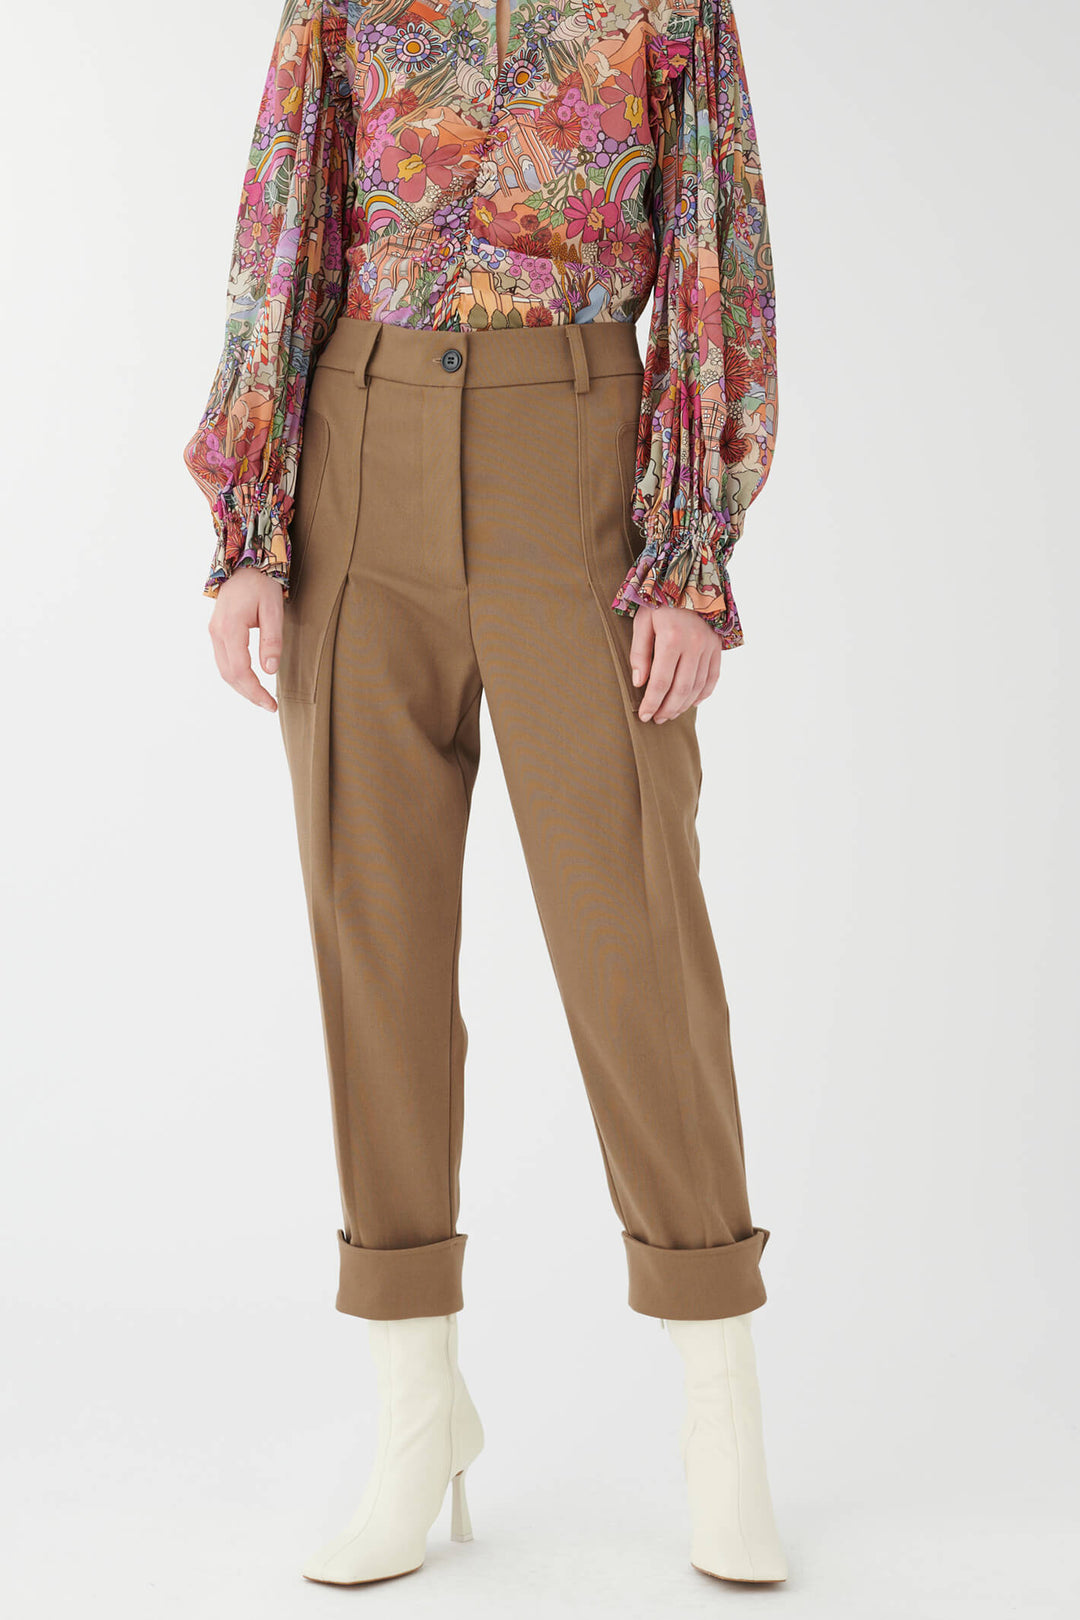 Dea Kudibal 0320723 Cargoni Mink Brown Pleat Trousers - Olivia Grace Fashion